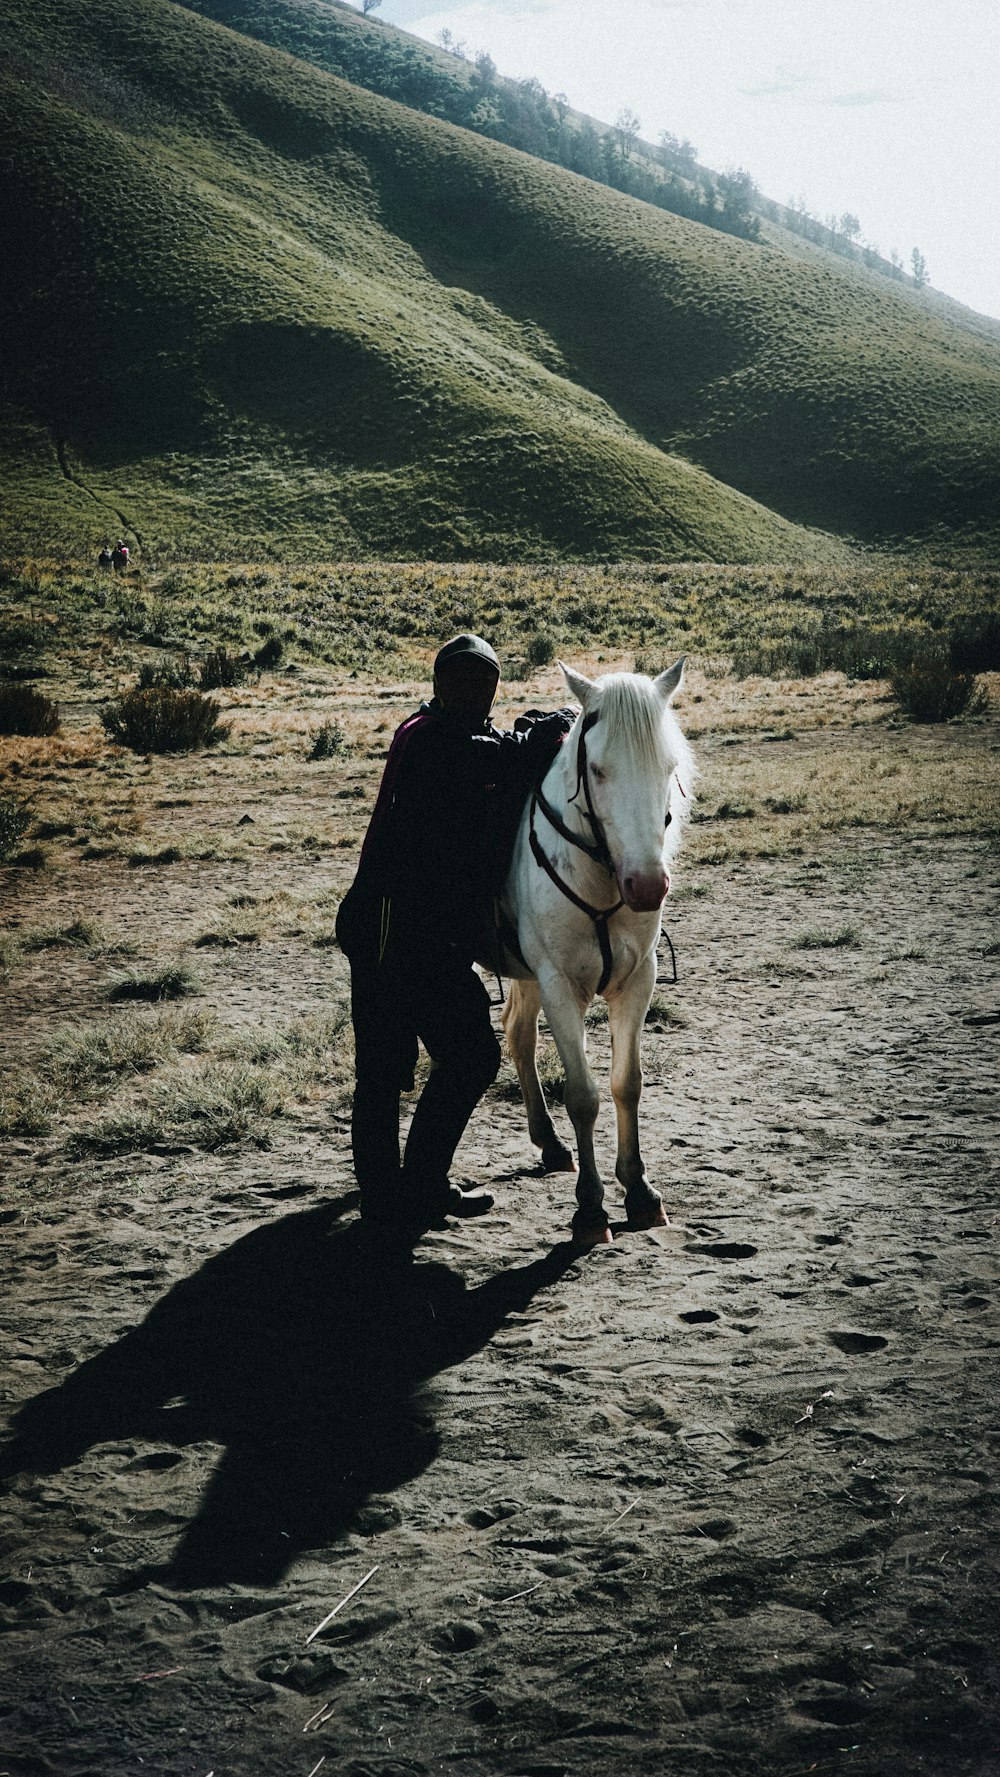 Un hombre paseando un caballo blanco por un camino de tierra